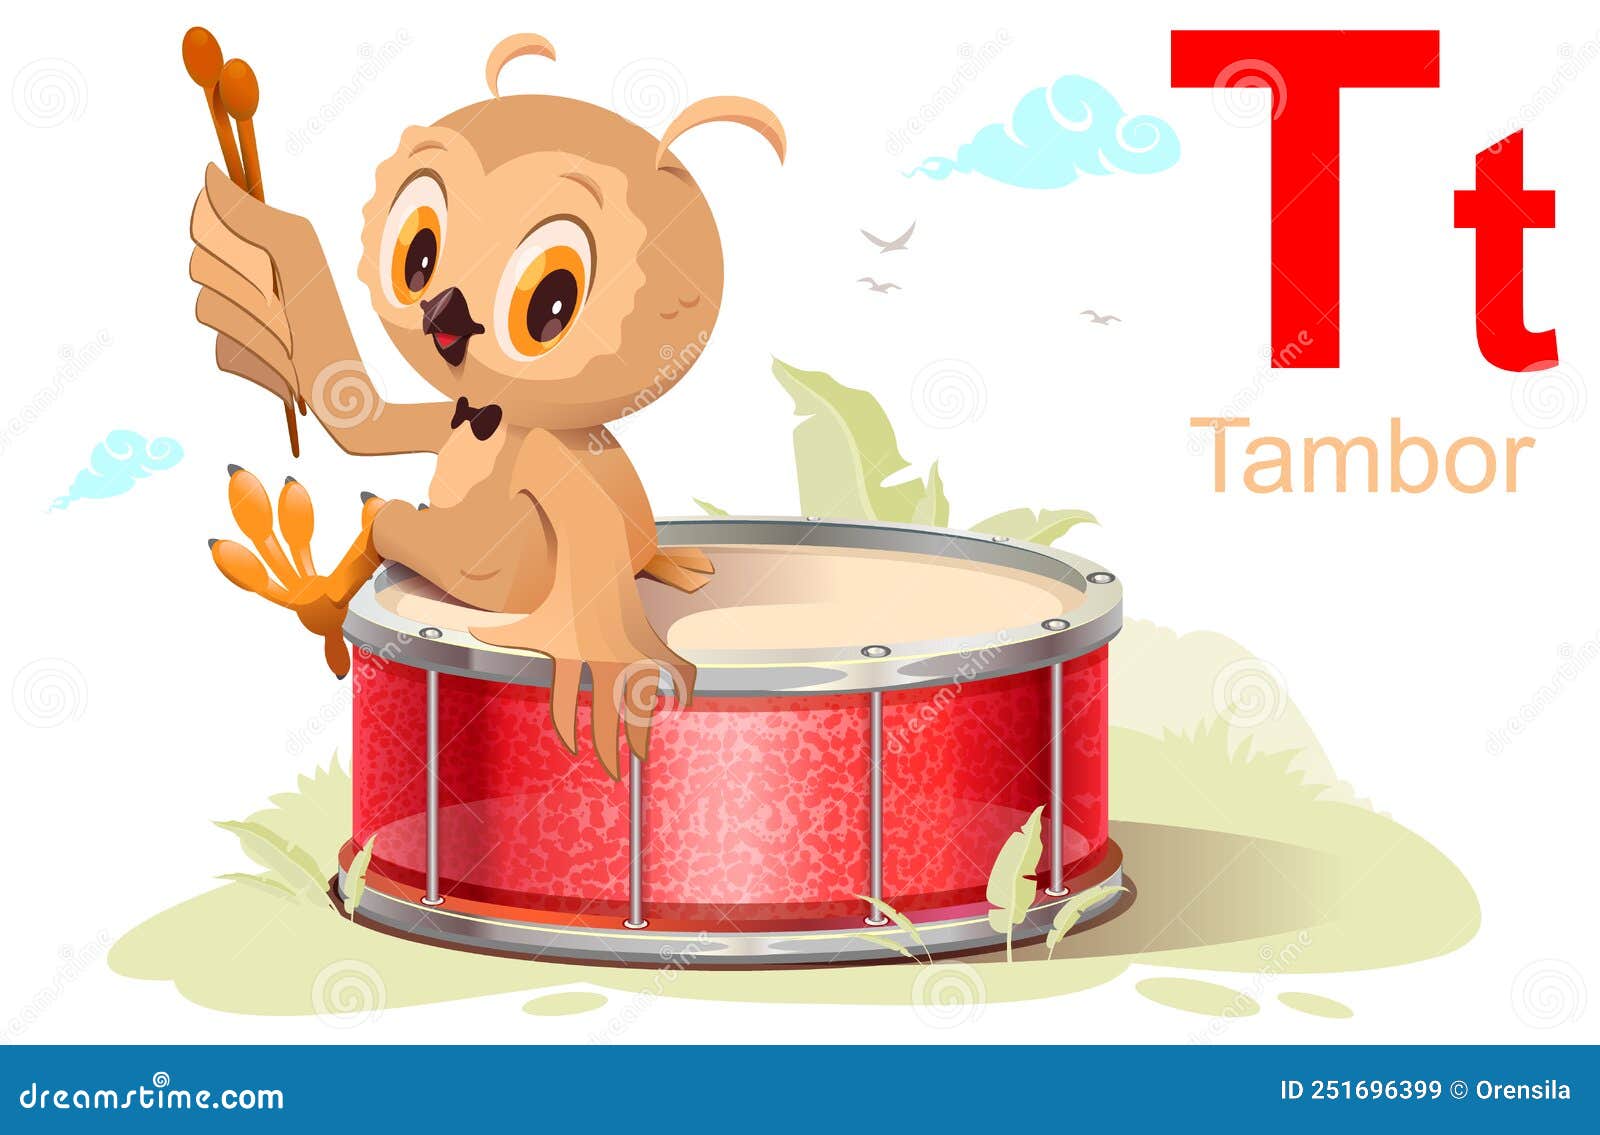 spanish alphabet study letter t drum spanish translation tambor. cute funny owl drummer sit